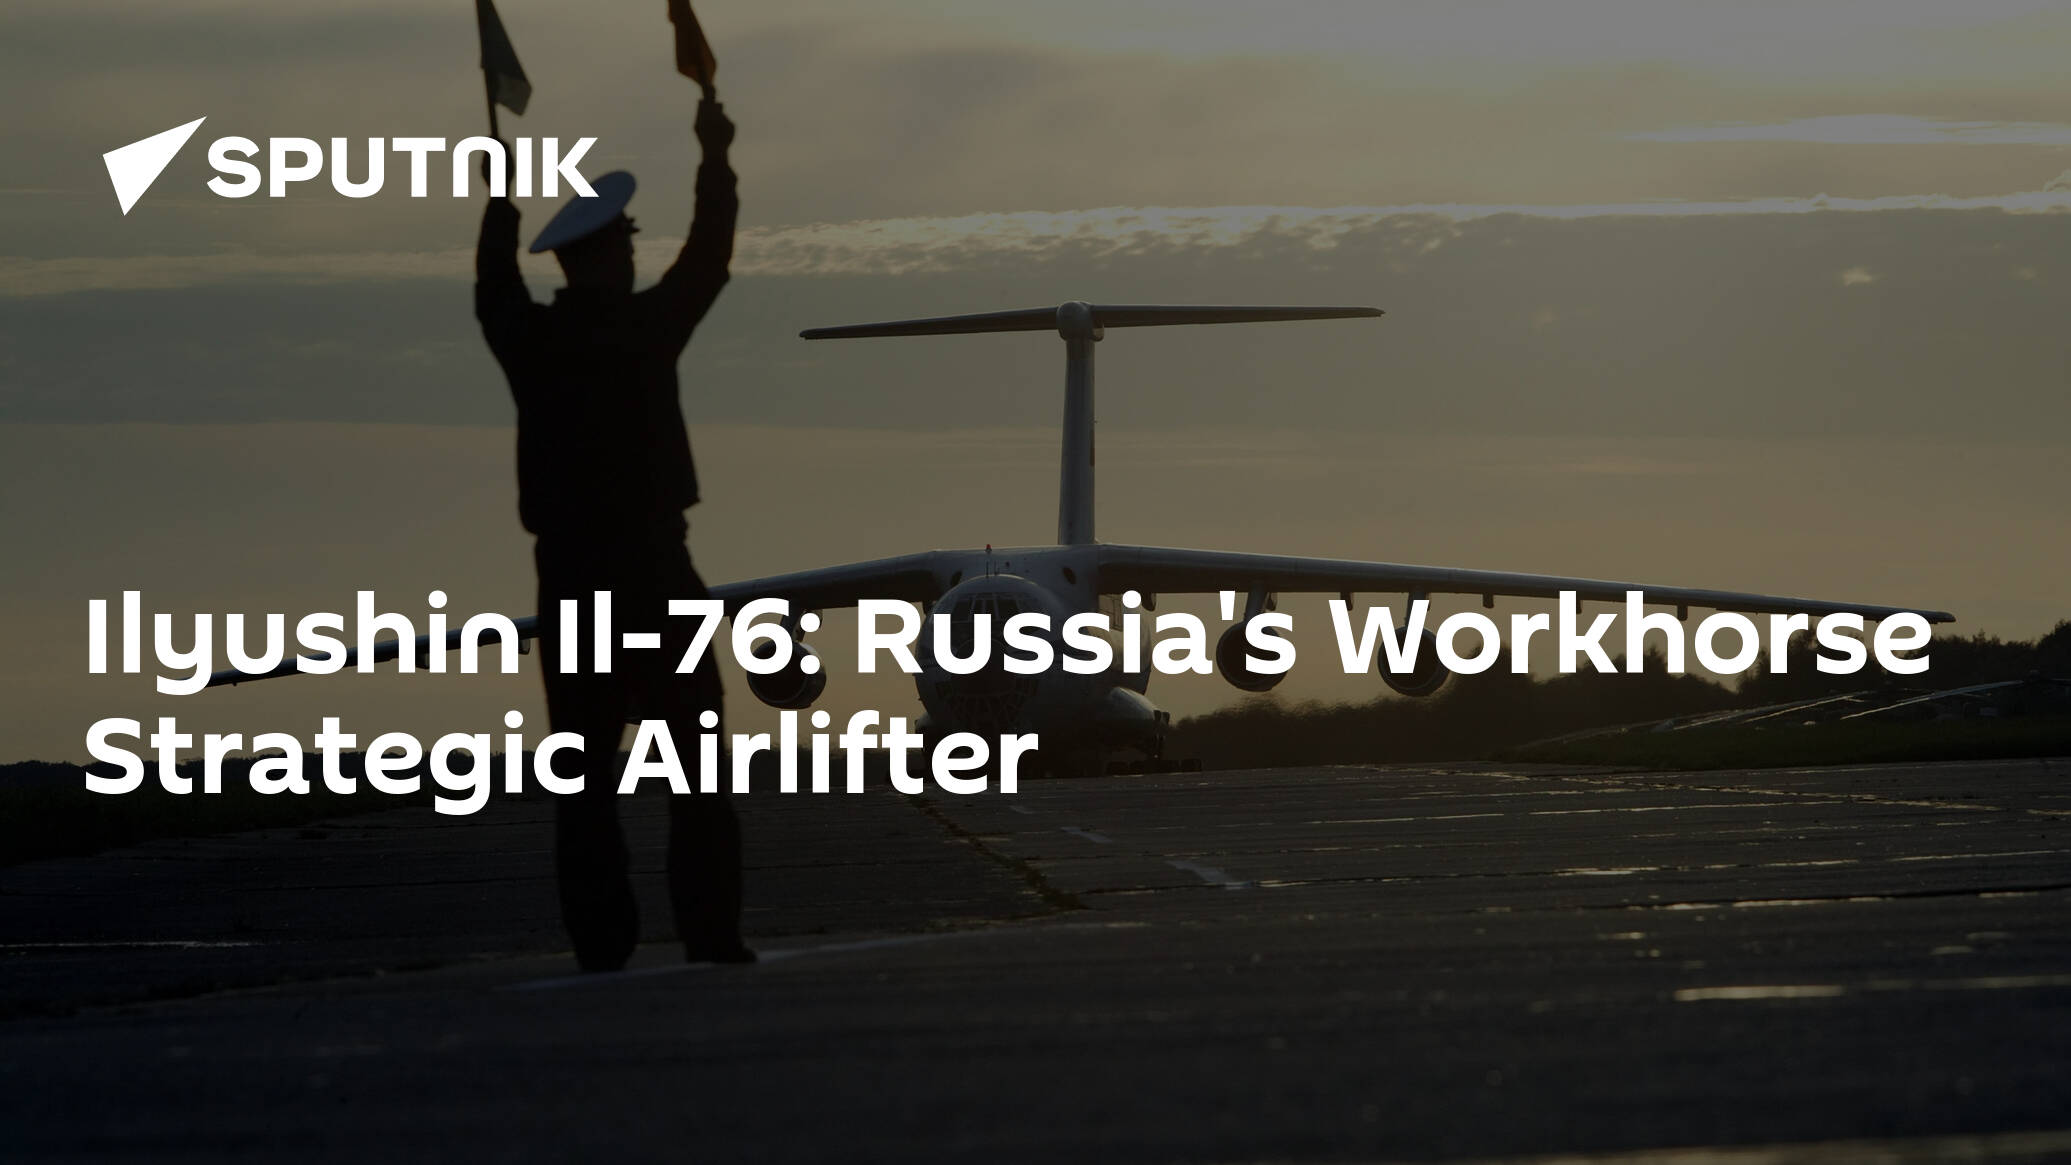 Ilyushin Il-76: Russia's Workhorse Strategic Airlifter